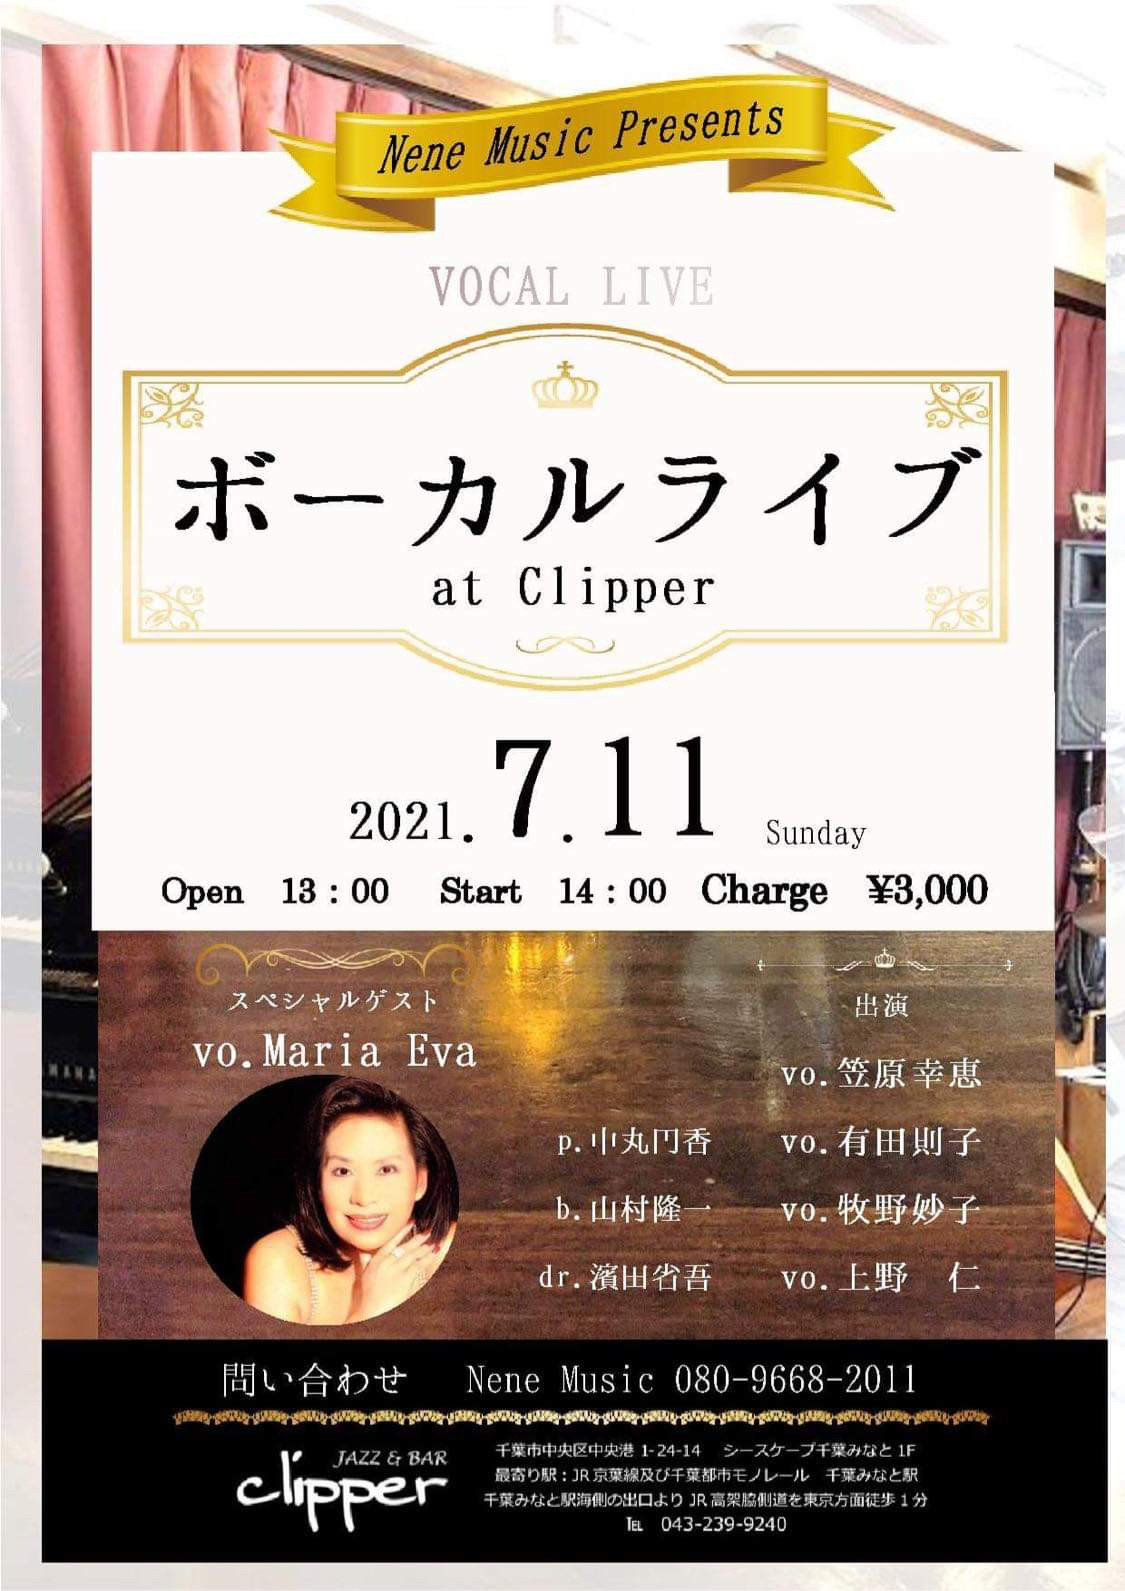 Nene Music Presents Vocal Live at clipper / special guest Maria Eva